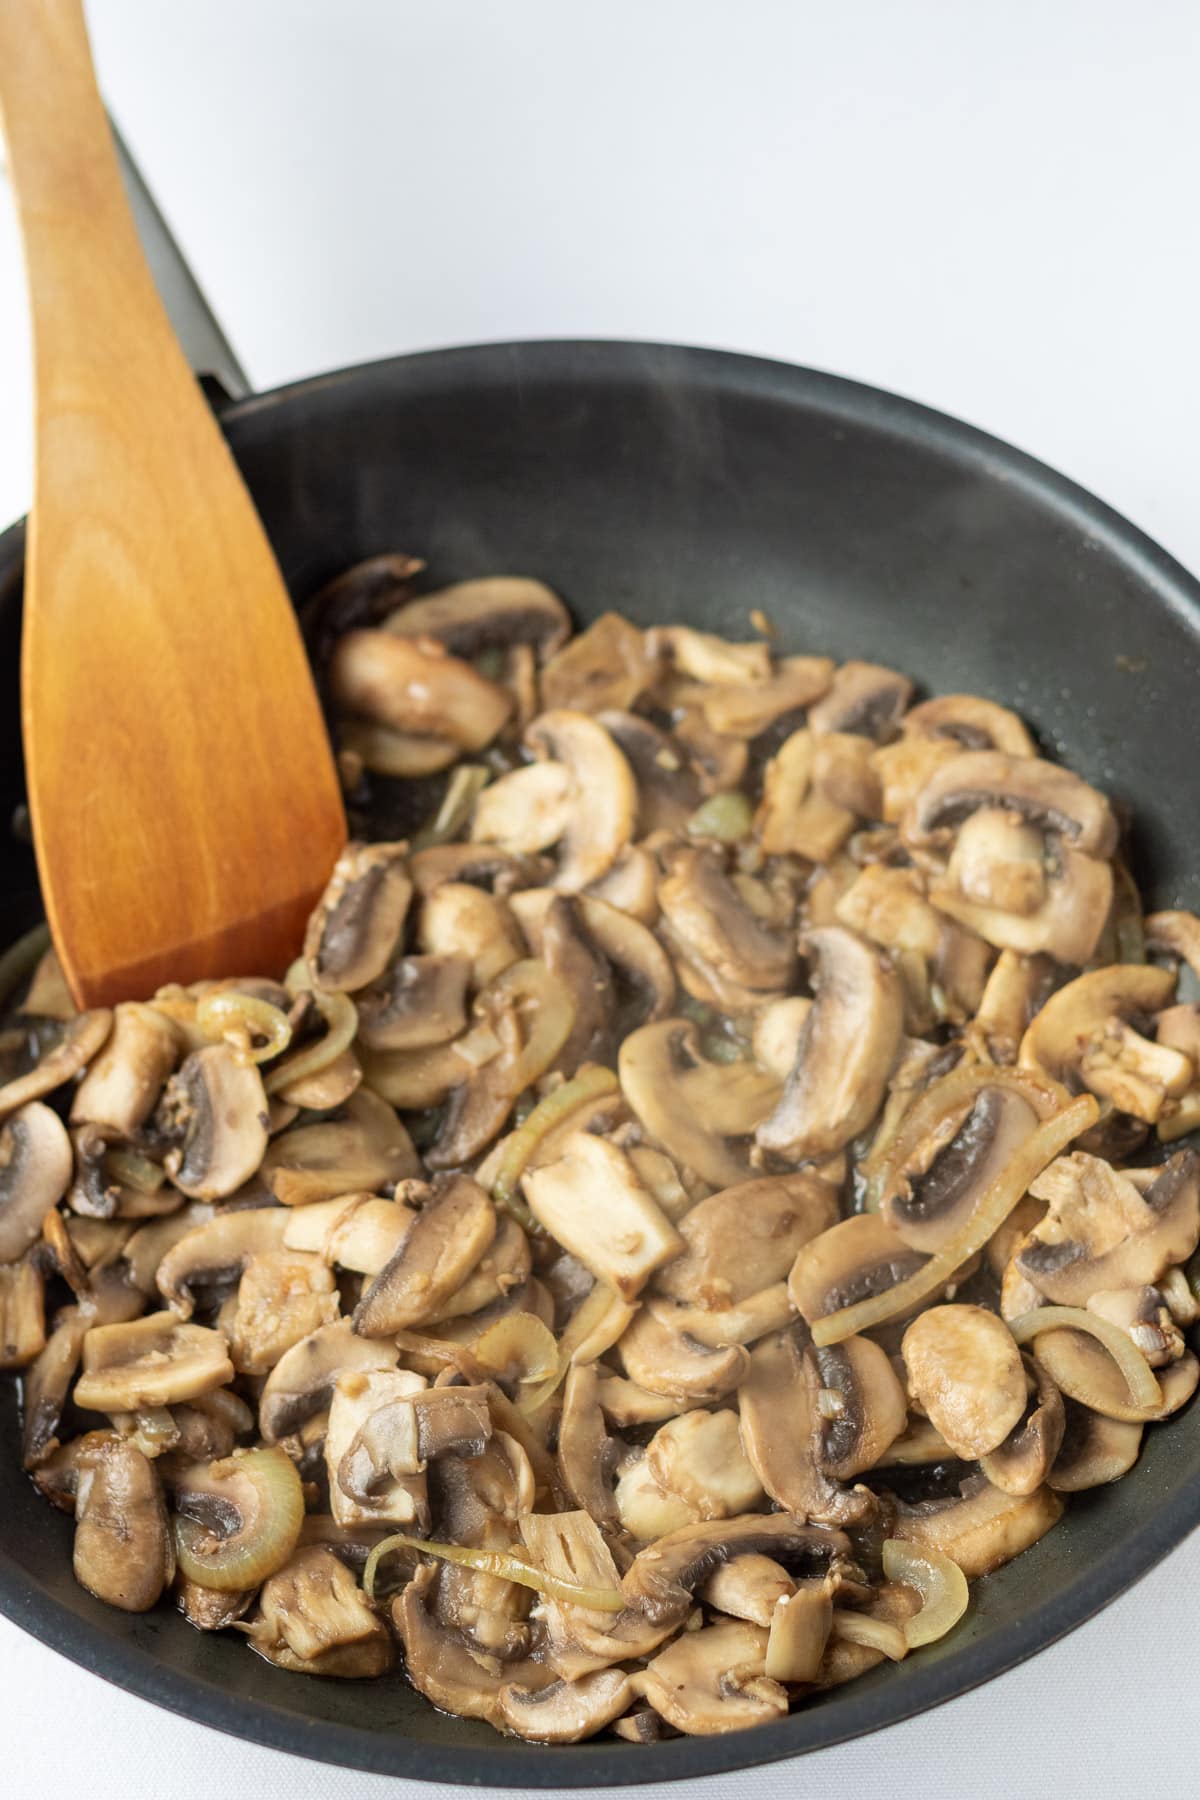 Onion, garlic and mushrooms sautéd in a frying pan.